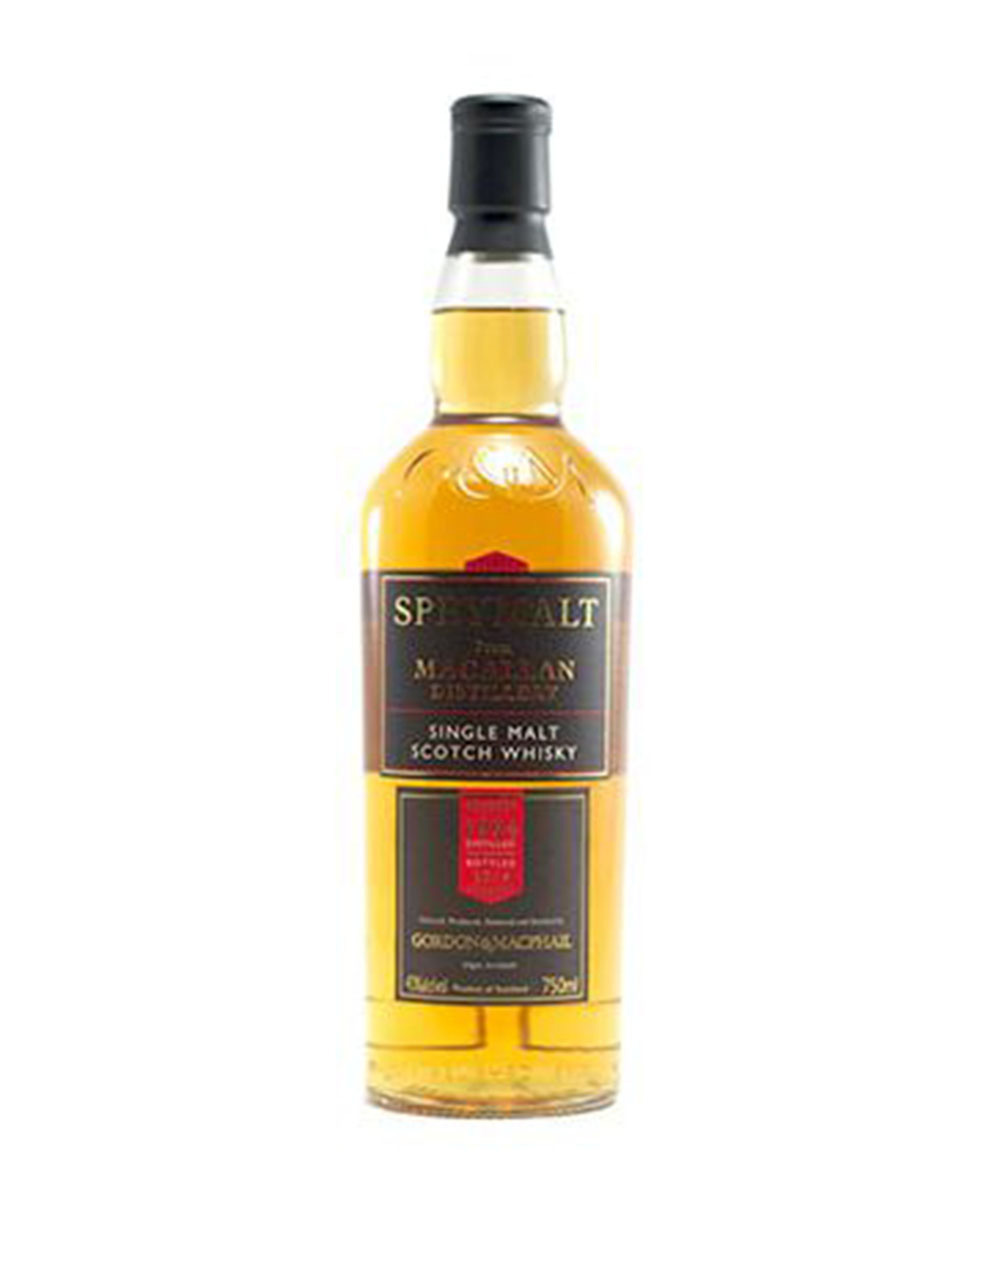 The Macallan Speymalt 19 Year Old Single Malt Scotch Whisky